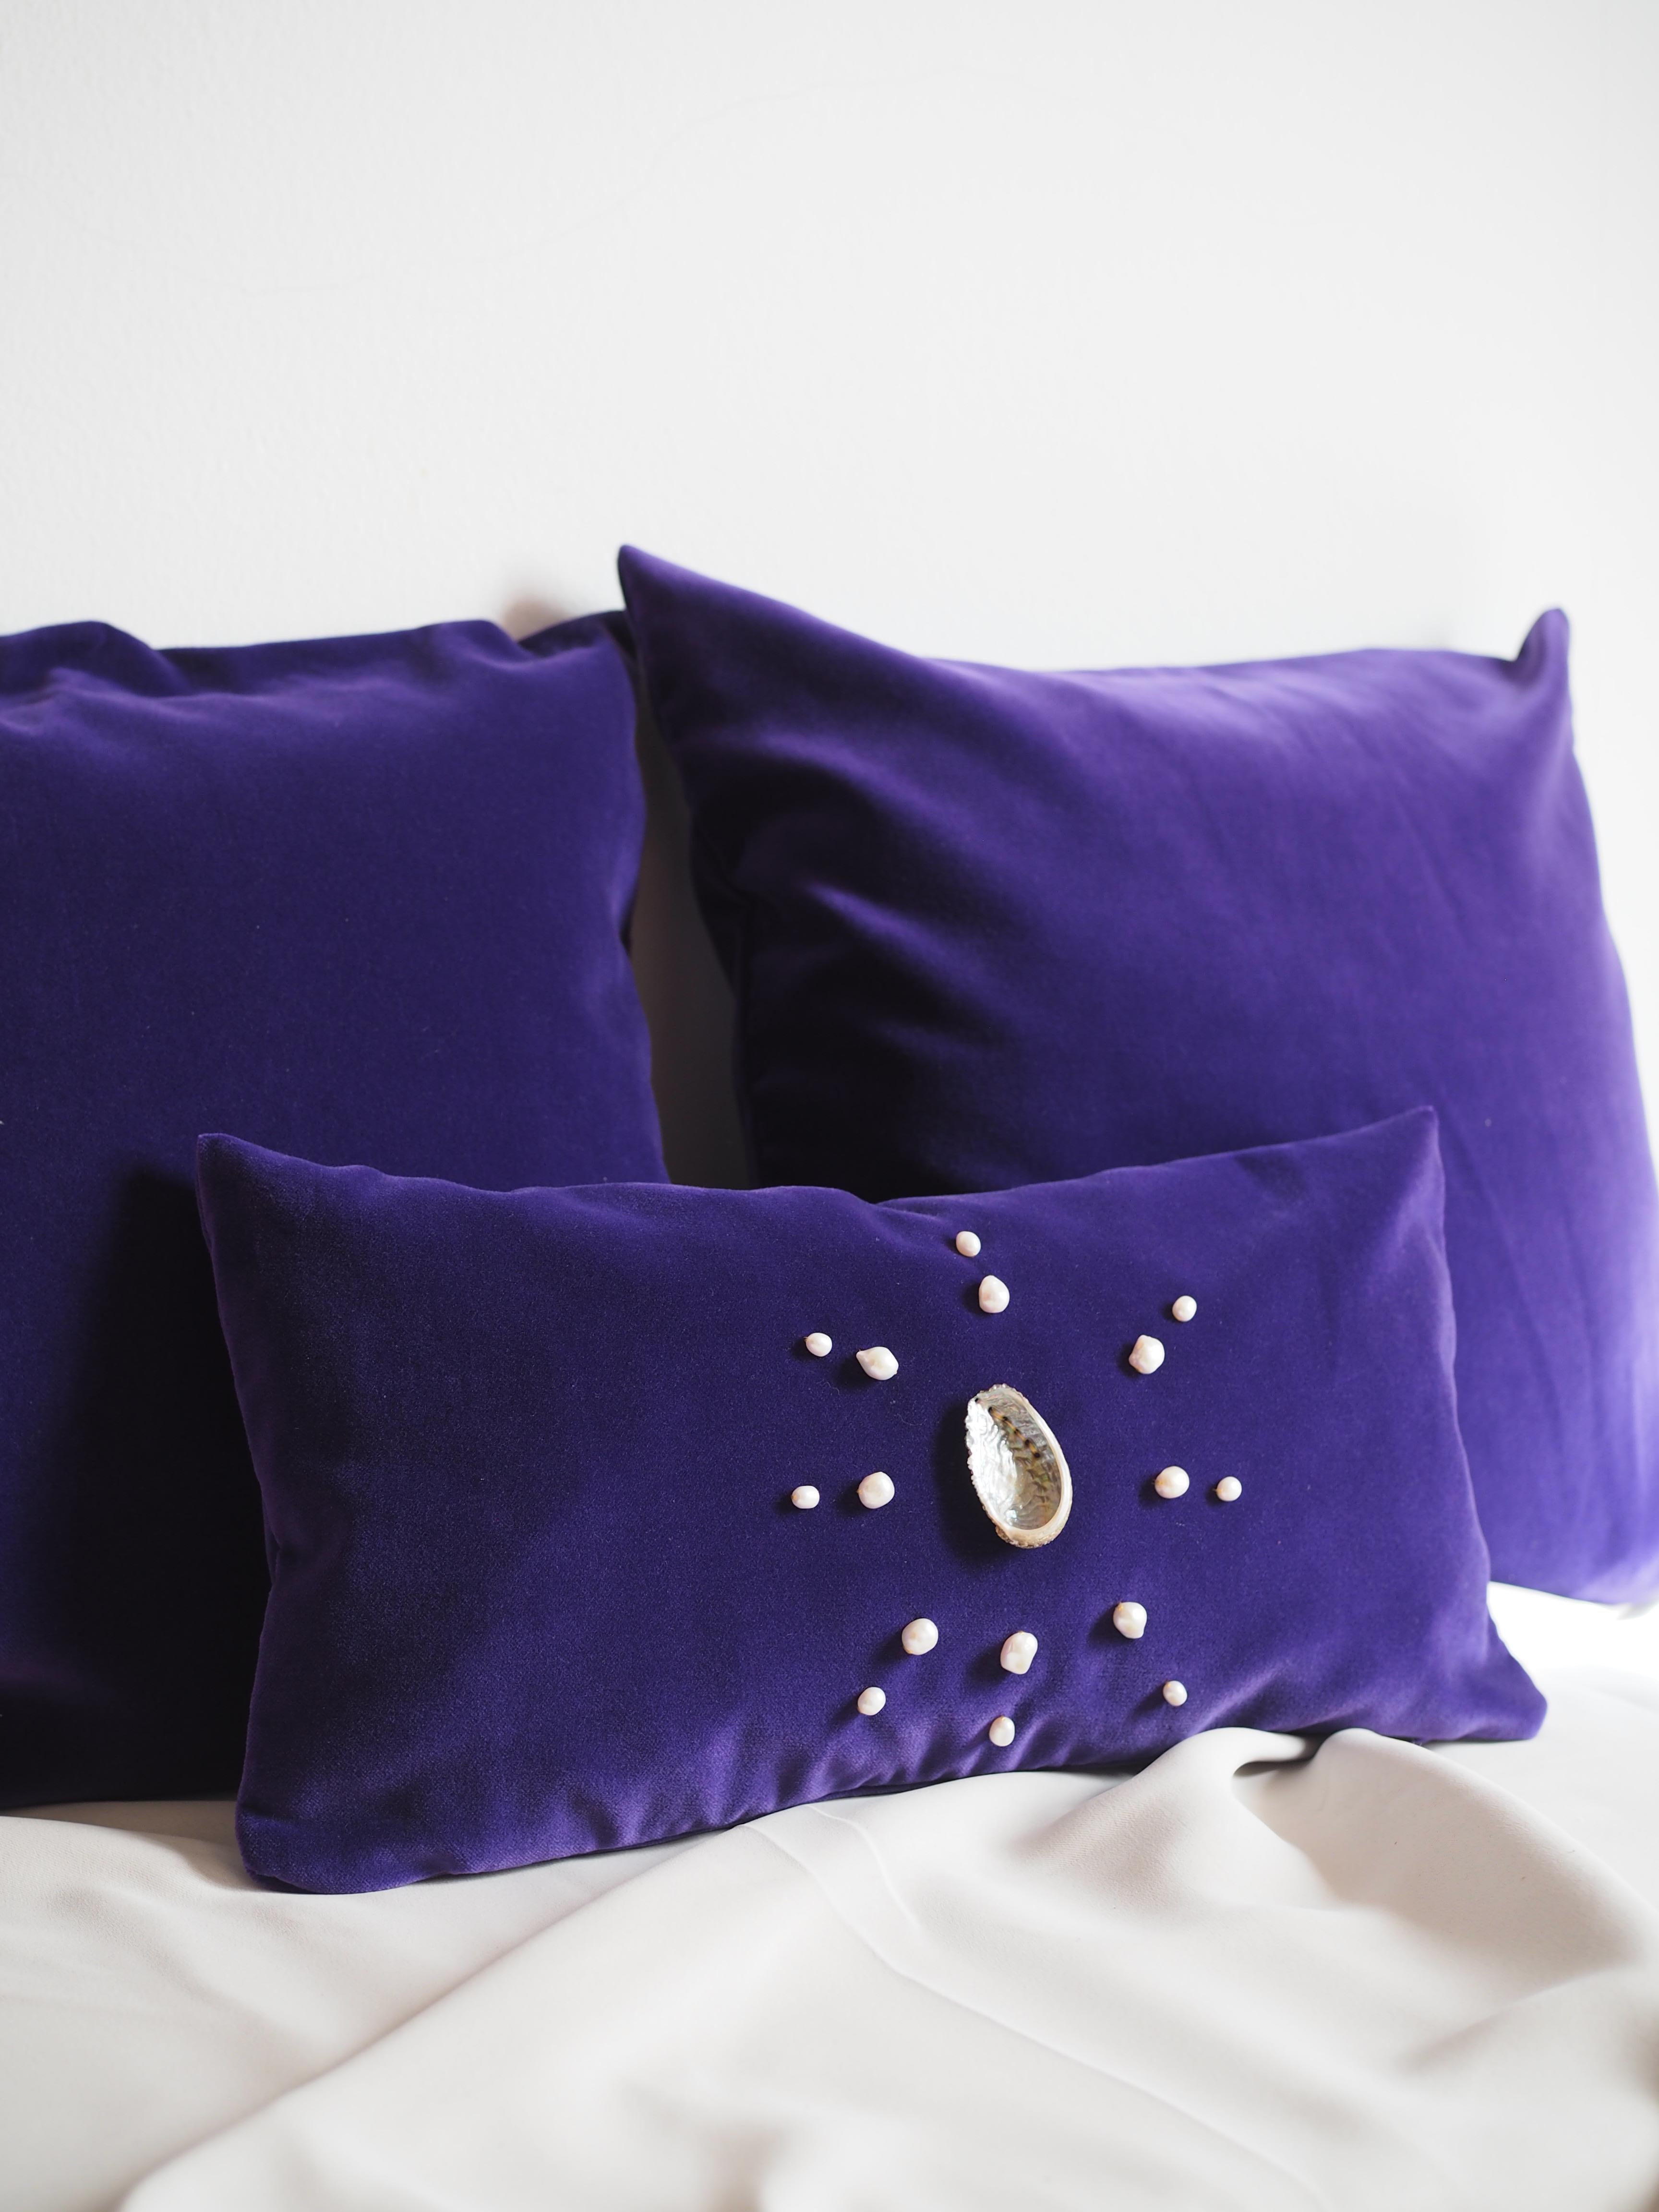 Spanish Bon Appetit 012 Decorative Cushion Culto Ponsoda 21st century desingn For Sale